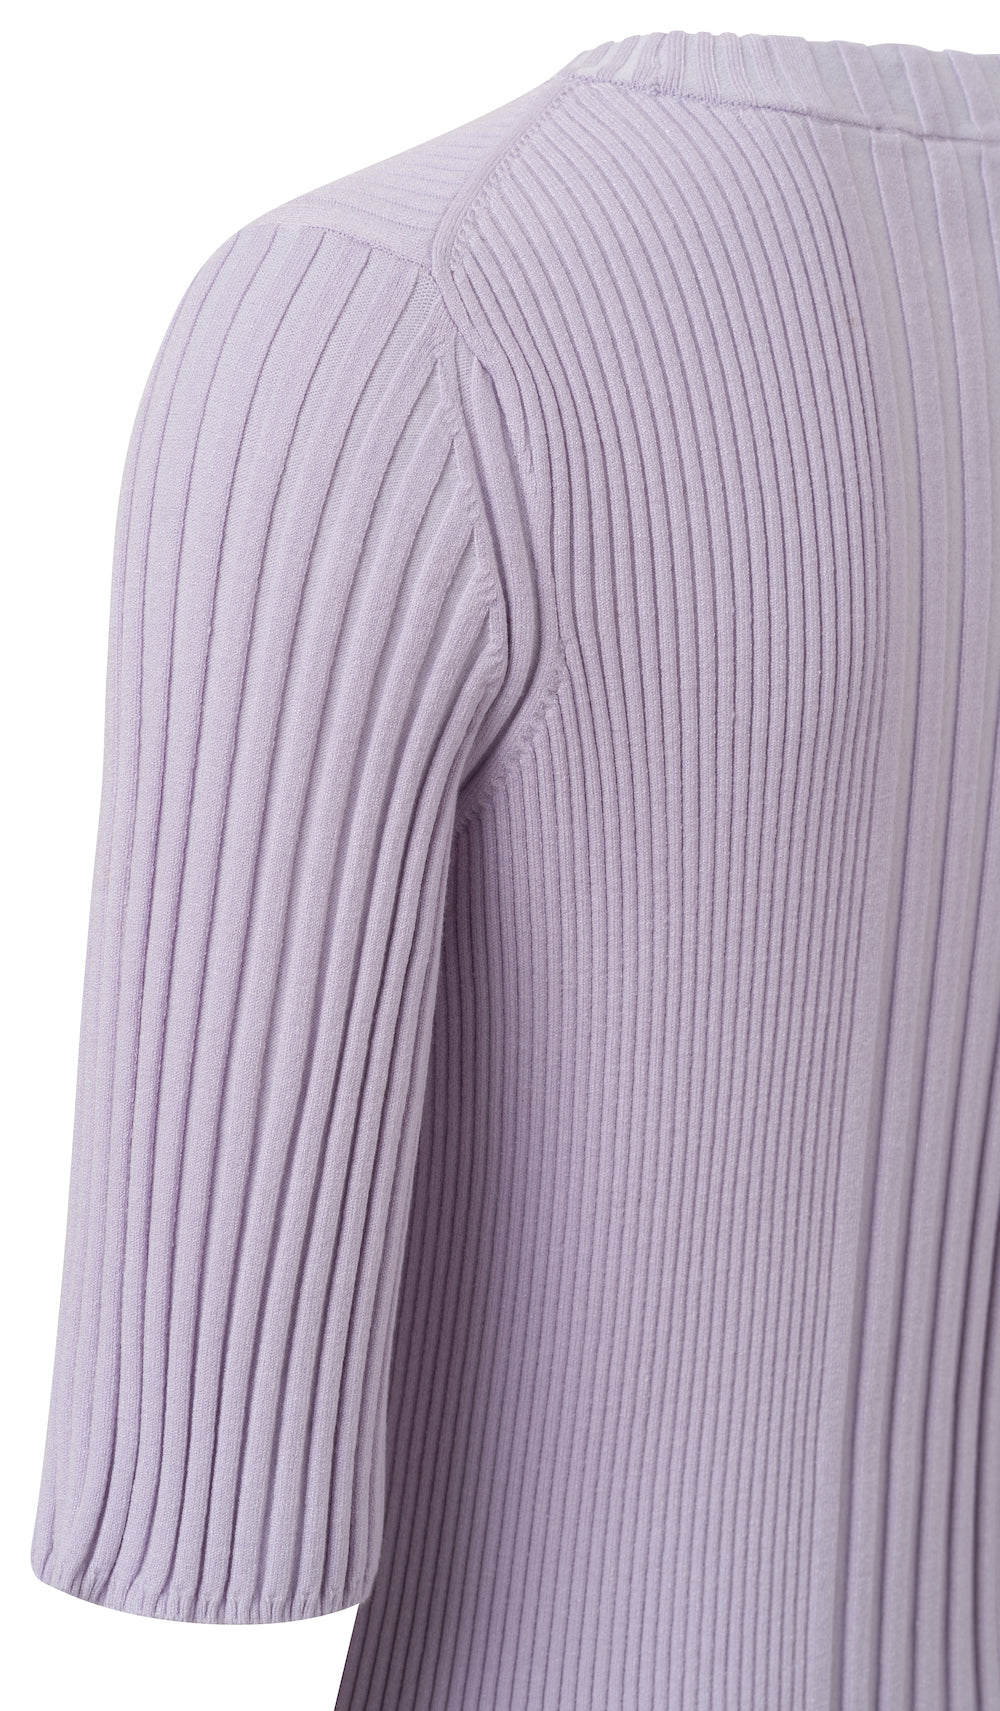 Yaya Two Tone Rib Top - Orchid Petal Purple Dessin Clothing - Tops - Shirts - SS Knits by Yaya | Grace the Boutique